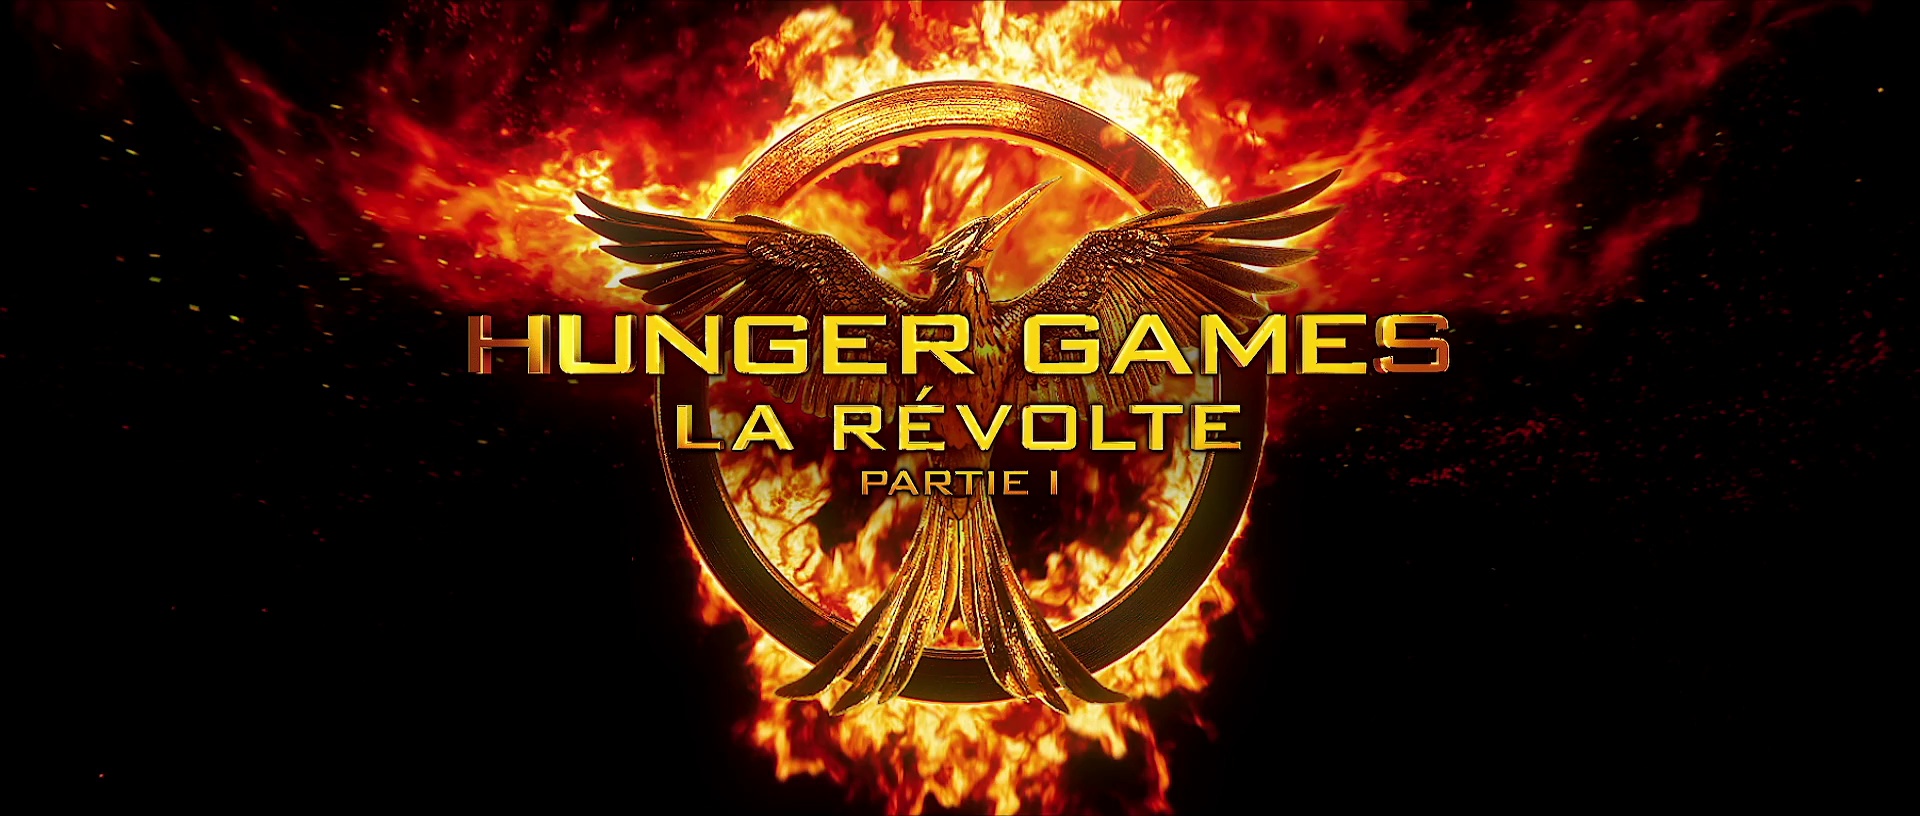 hunger games 3 - Hunger Games : La Révolte - Partie 1 hunger games 3 revolte